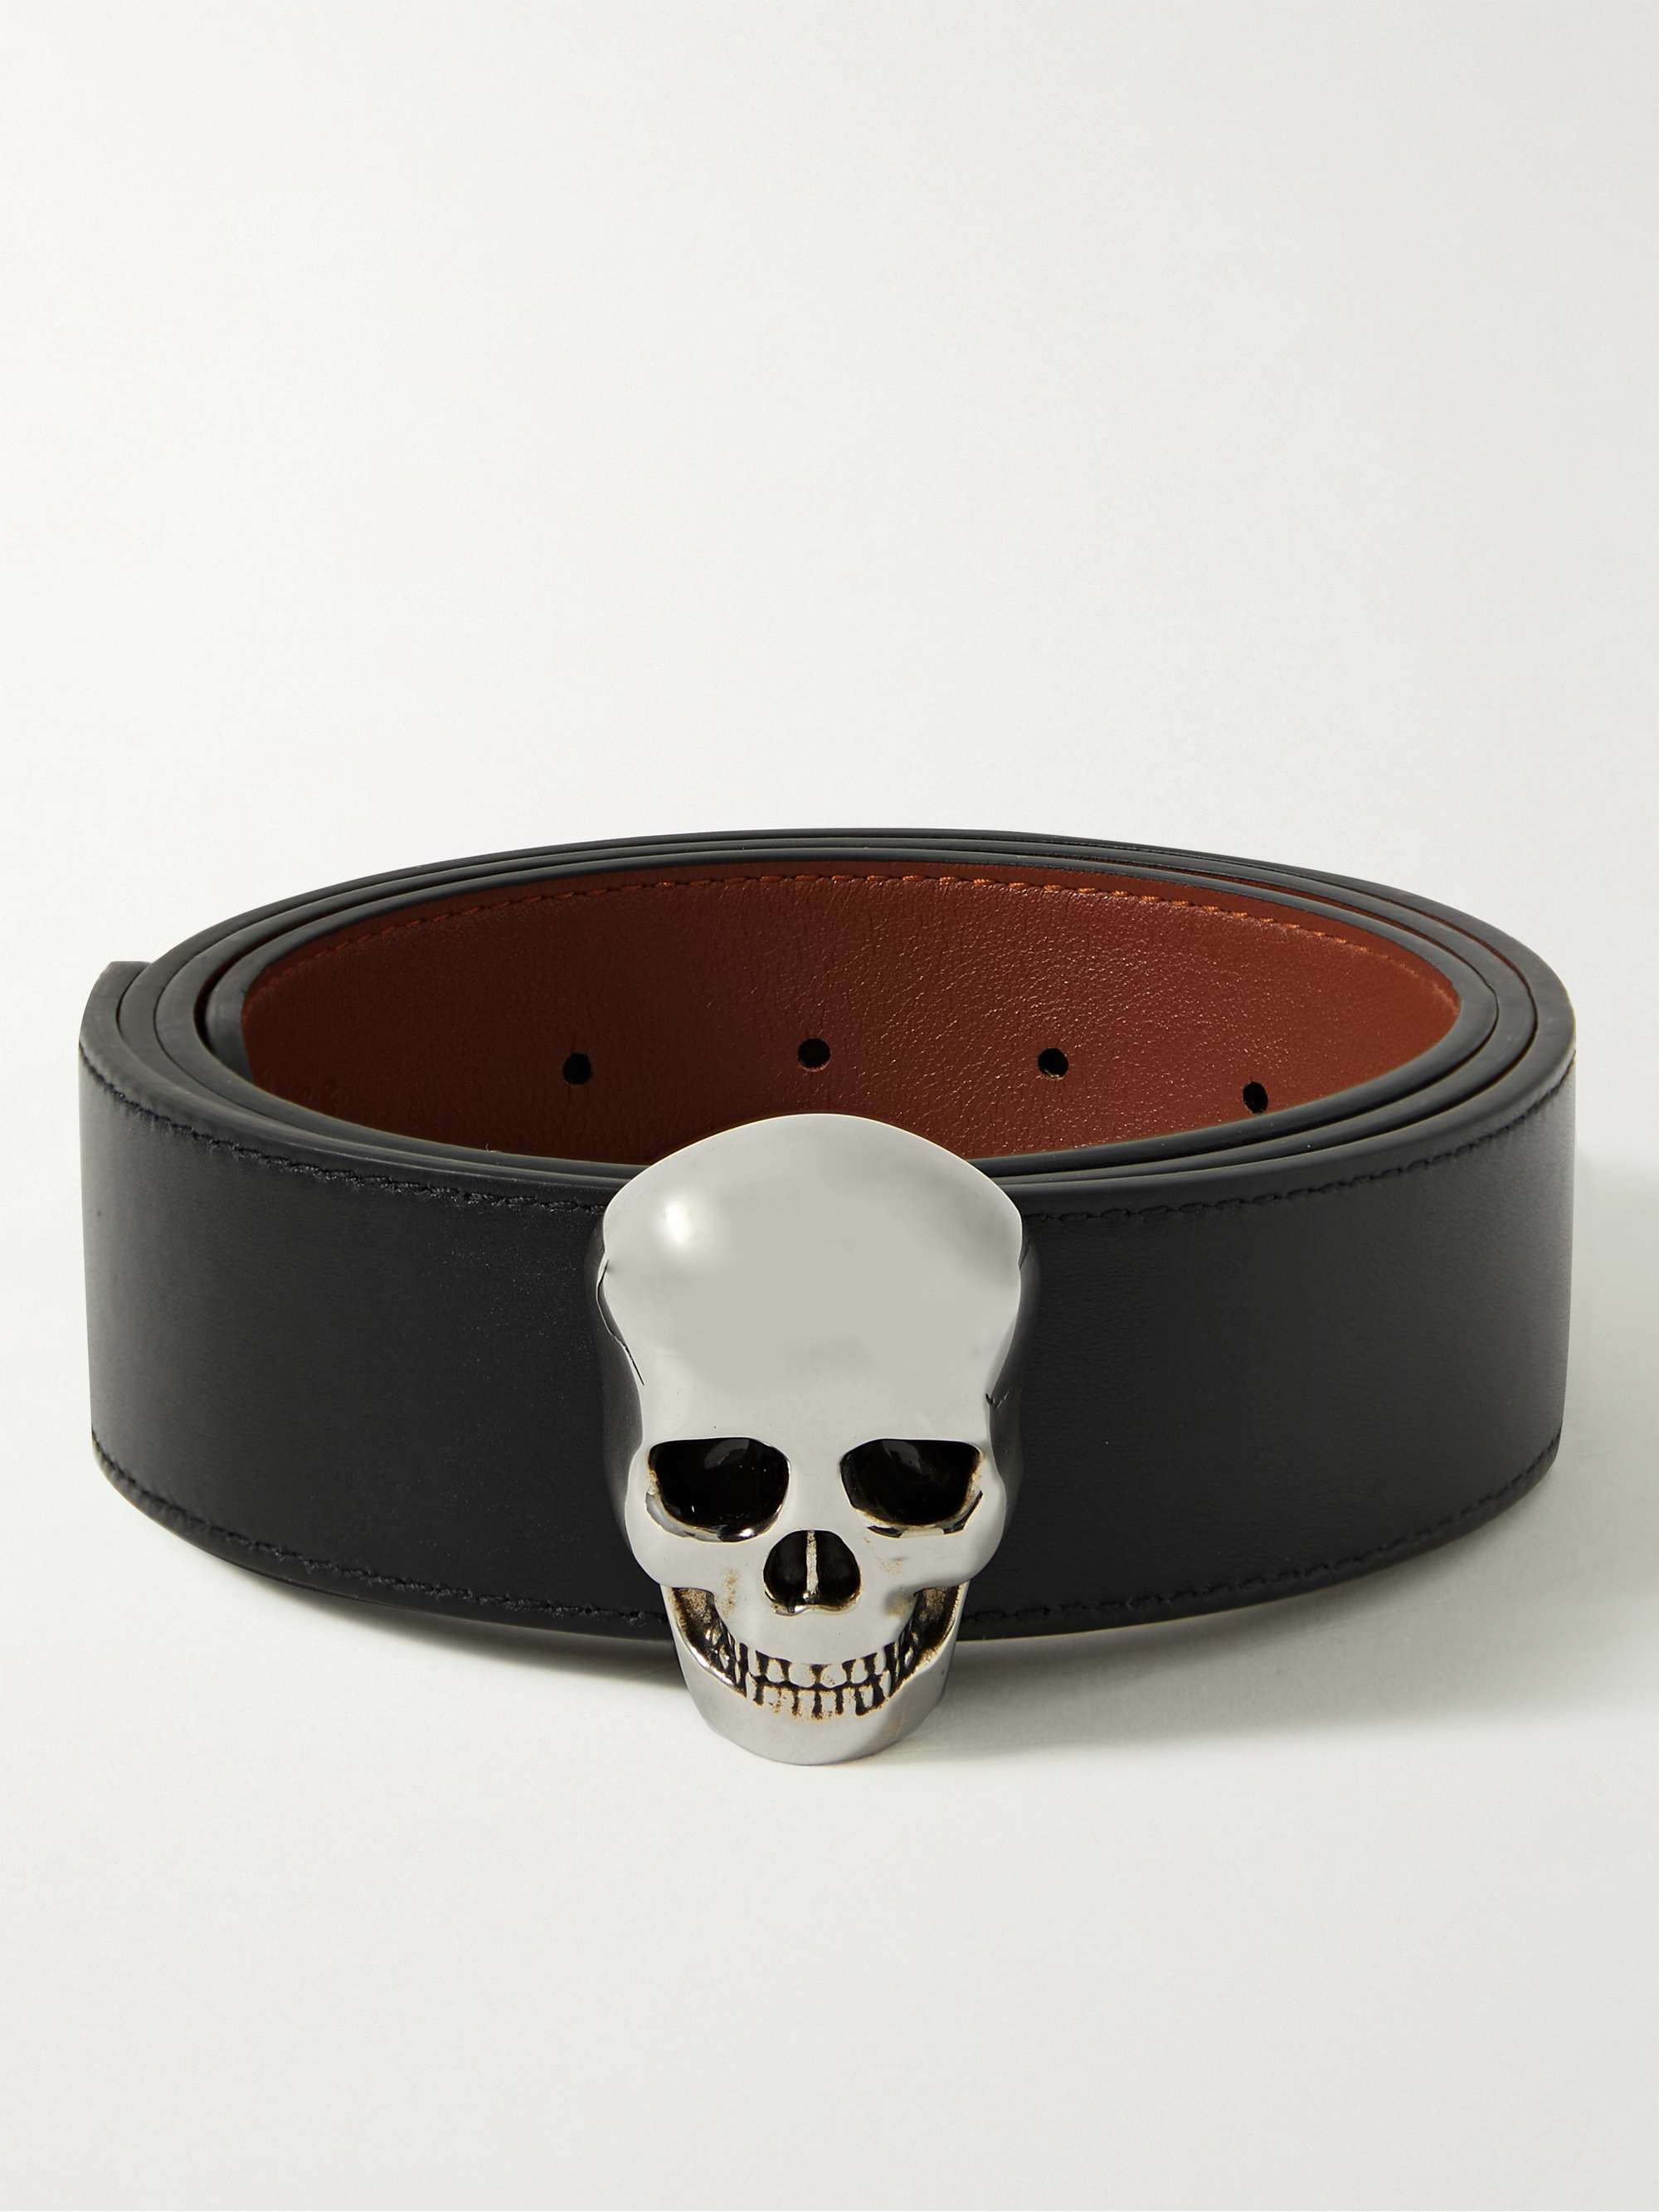 4cm Reversible Leather Belt